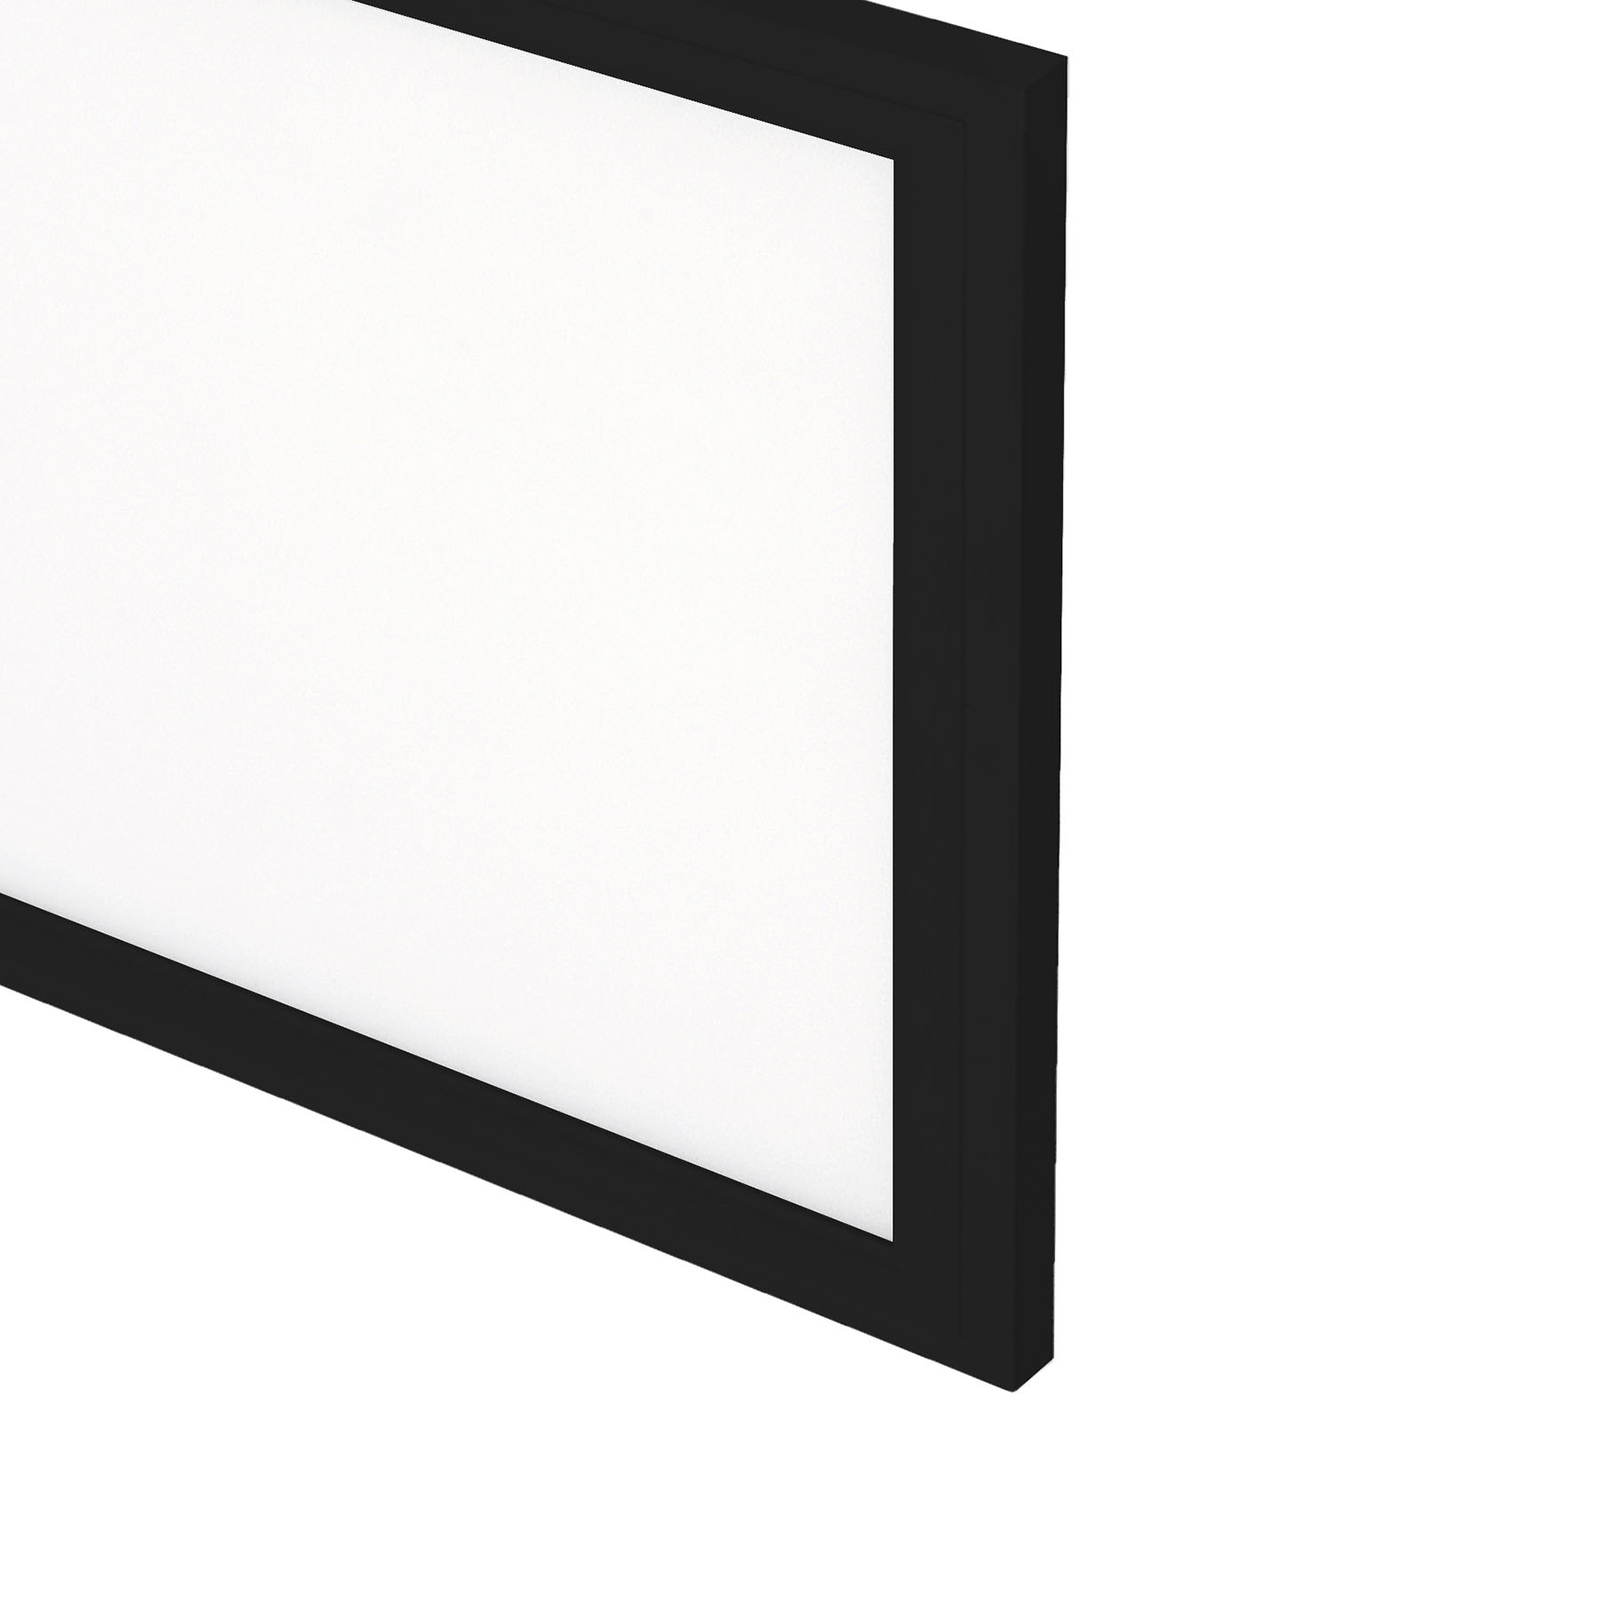 LED-Panel Simple, schwarz, ultraflach, 30x30cm